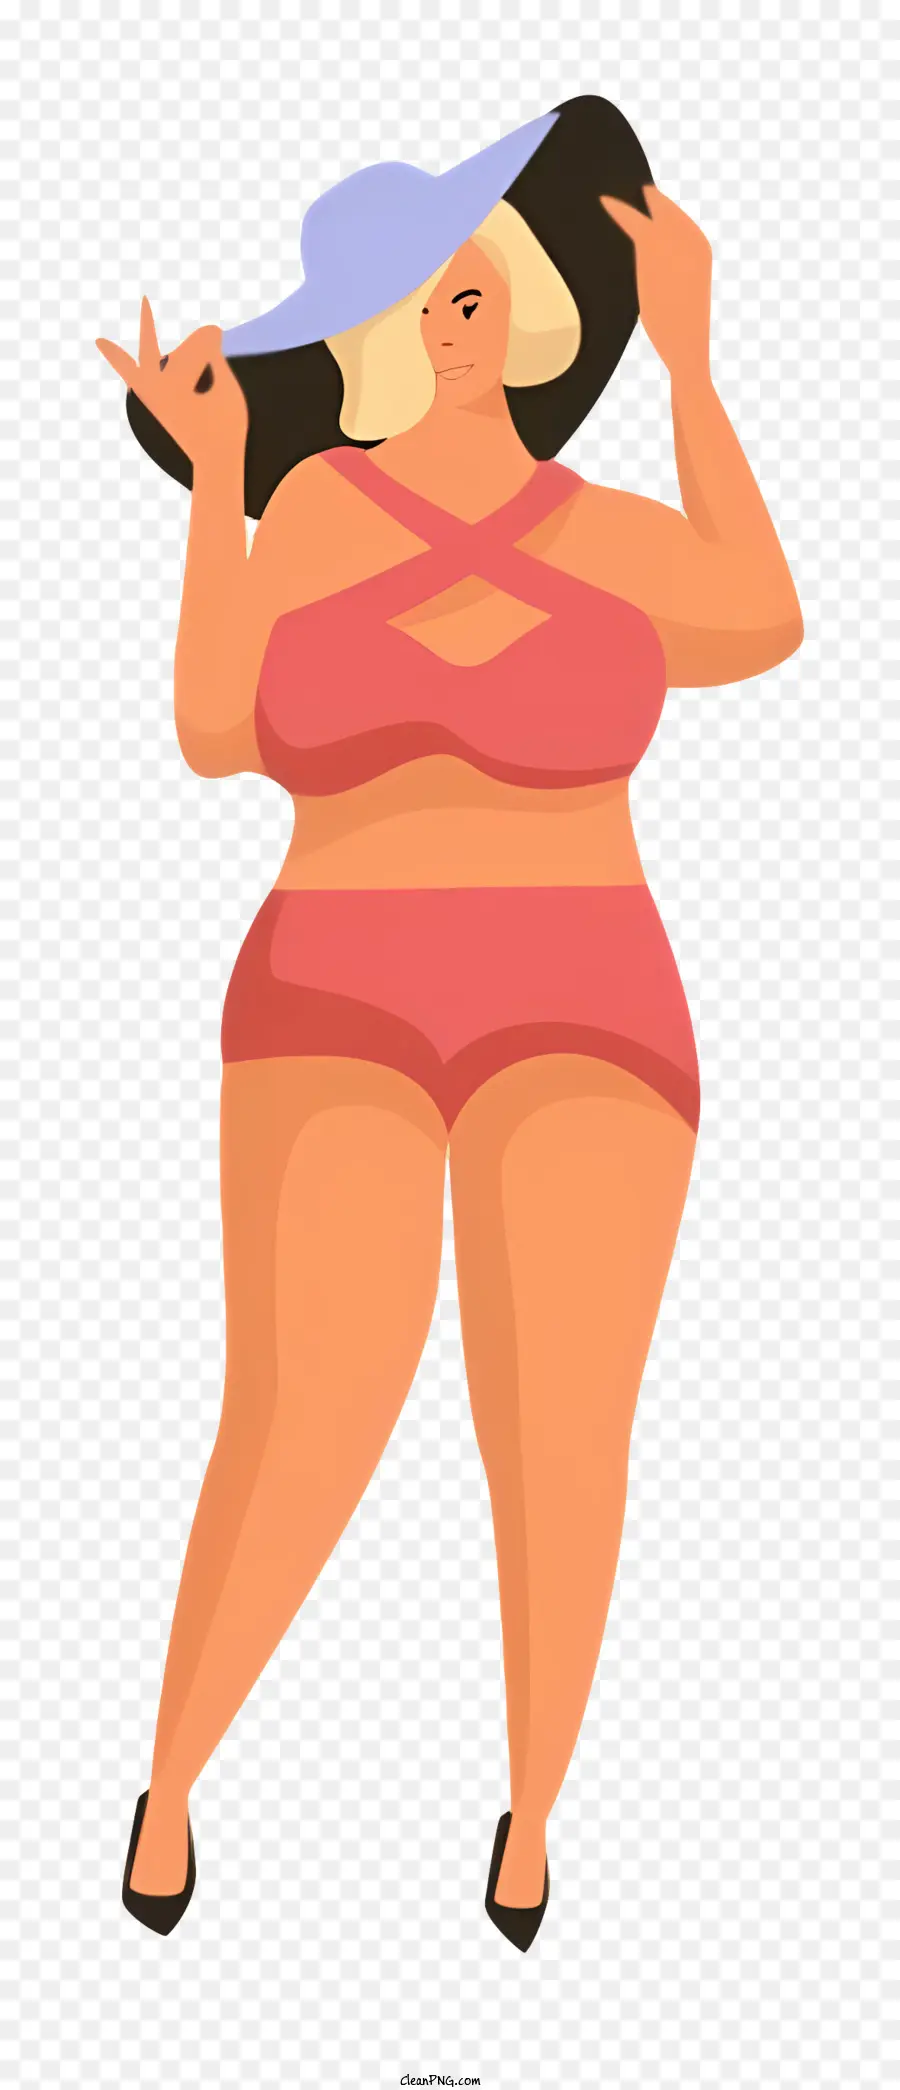 Fette Körper Cartoon Frau rosa Bikini rosa Hutarme angehoben - Cartoonfrau im rosa Bikini winkt freudig